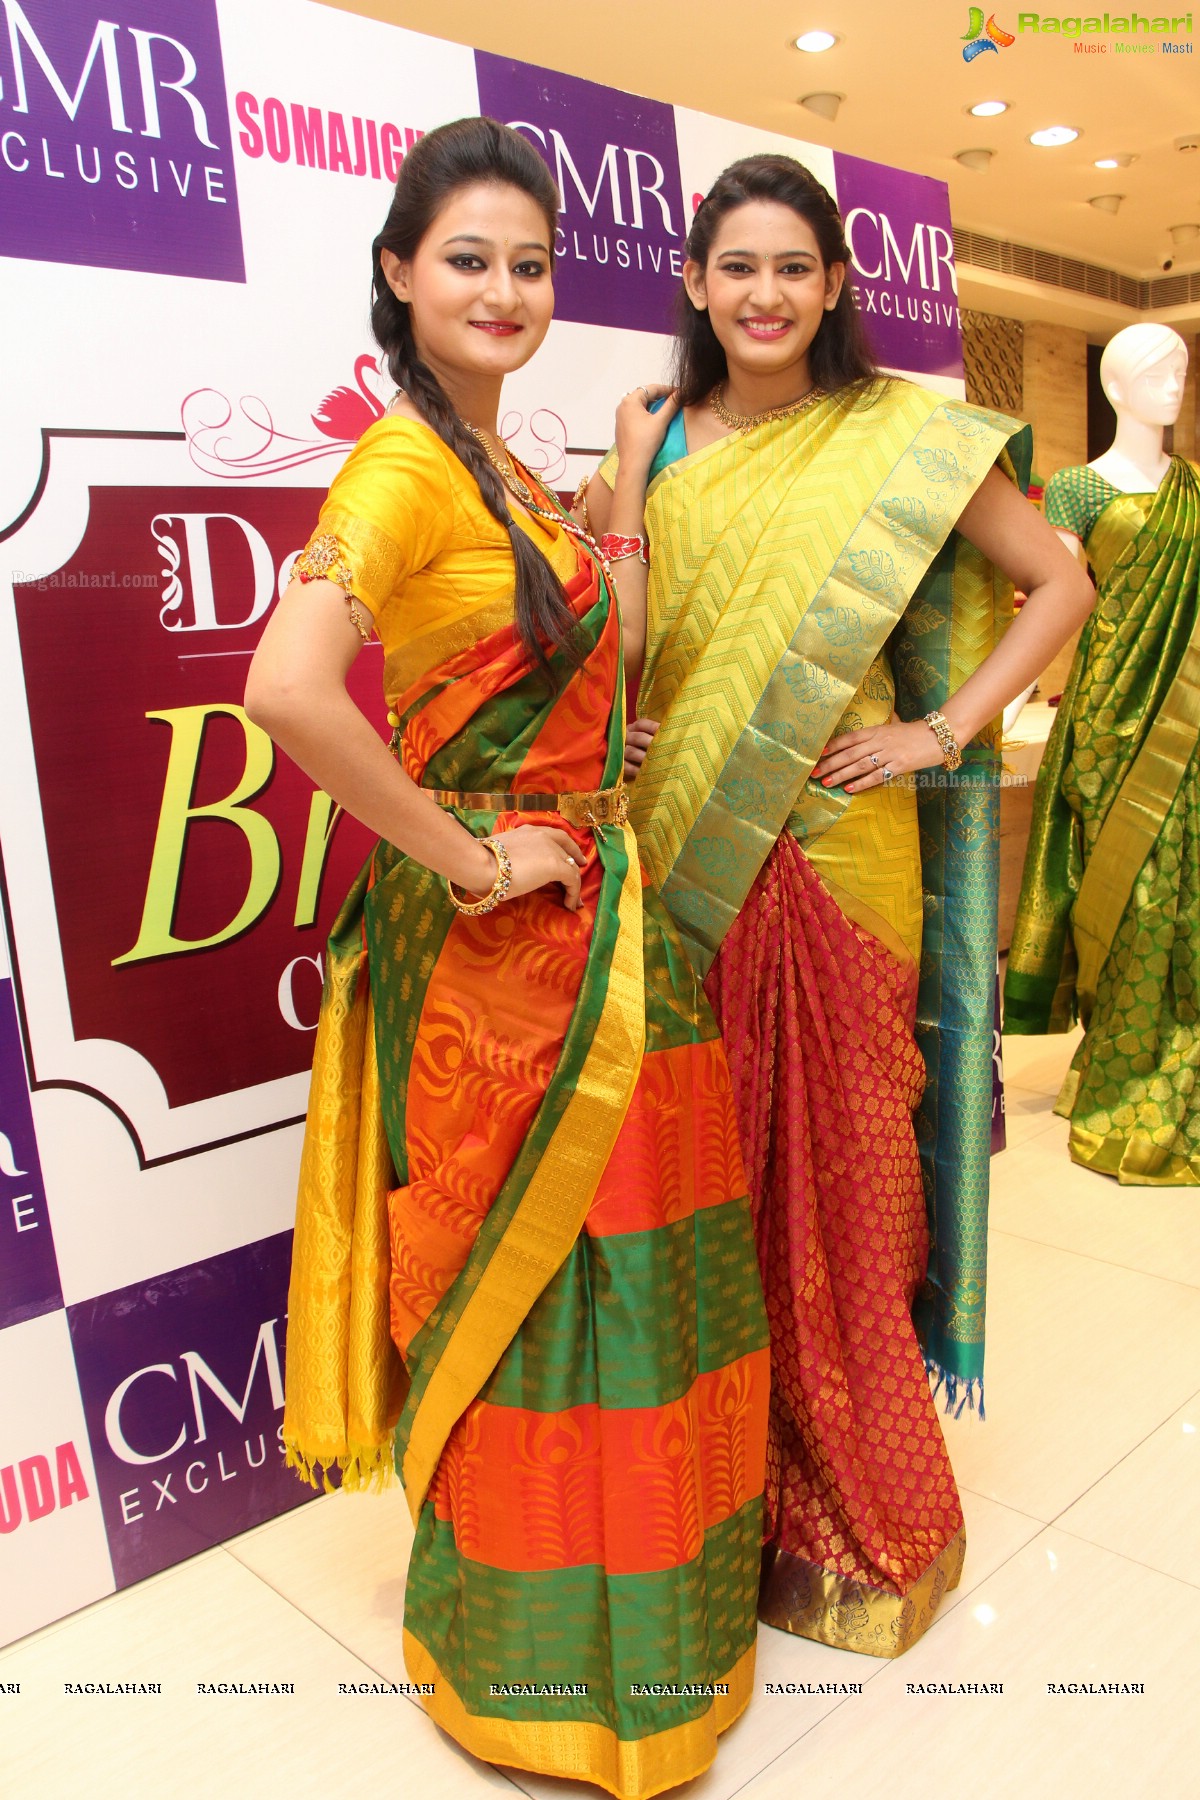 CMR Designer Bridal Collection Launch 2015